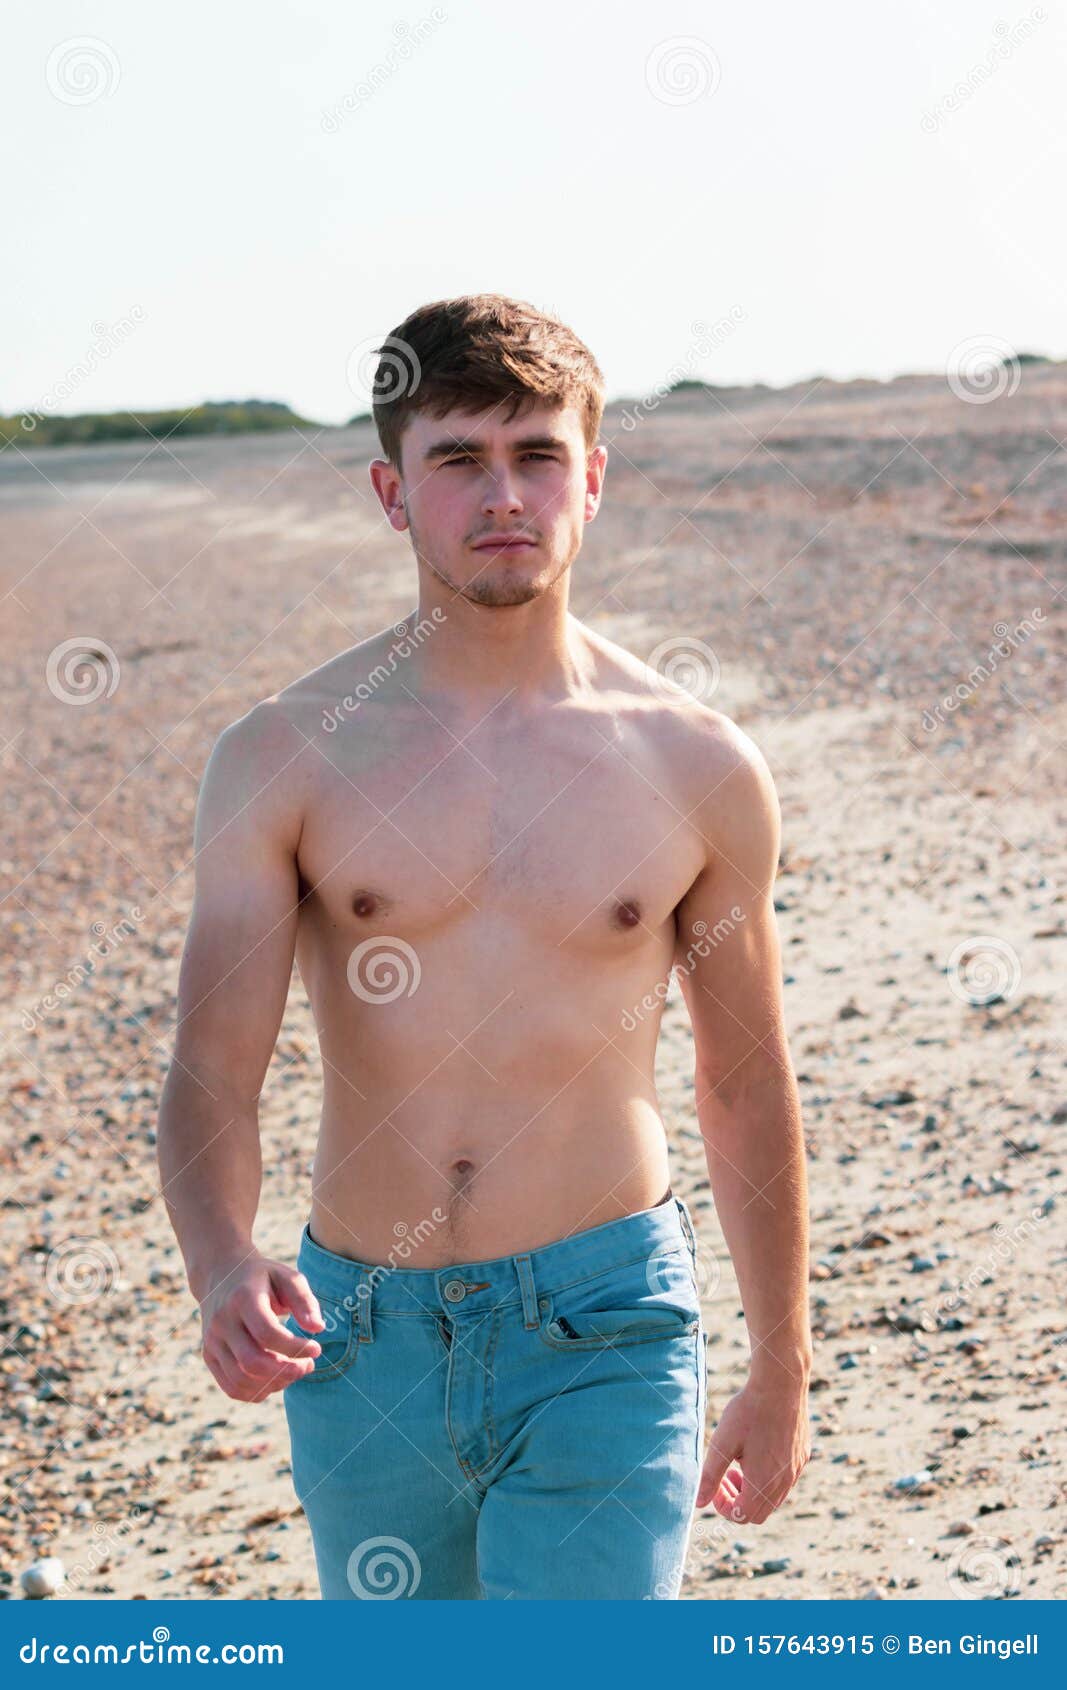 Shirtless on a beach stock image. Image of denim, seashore - 157643915